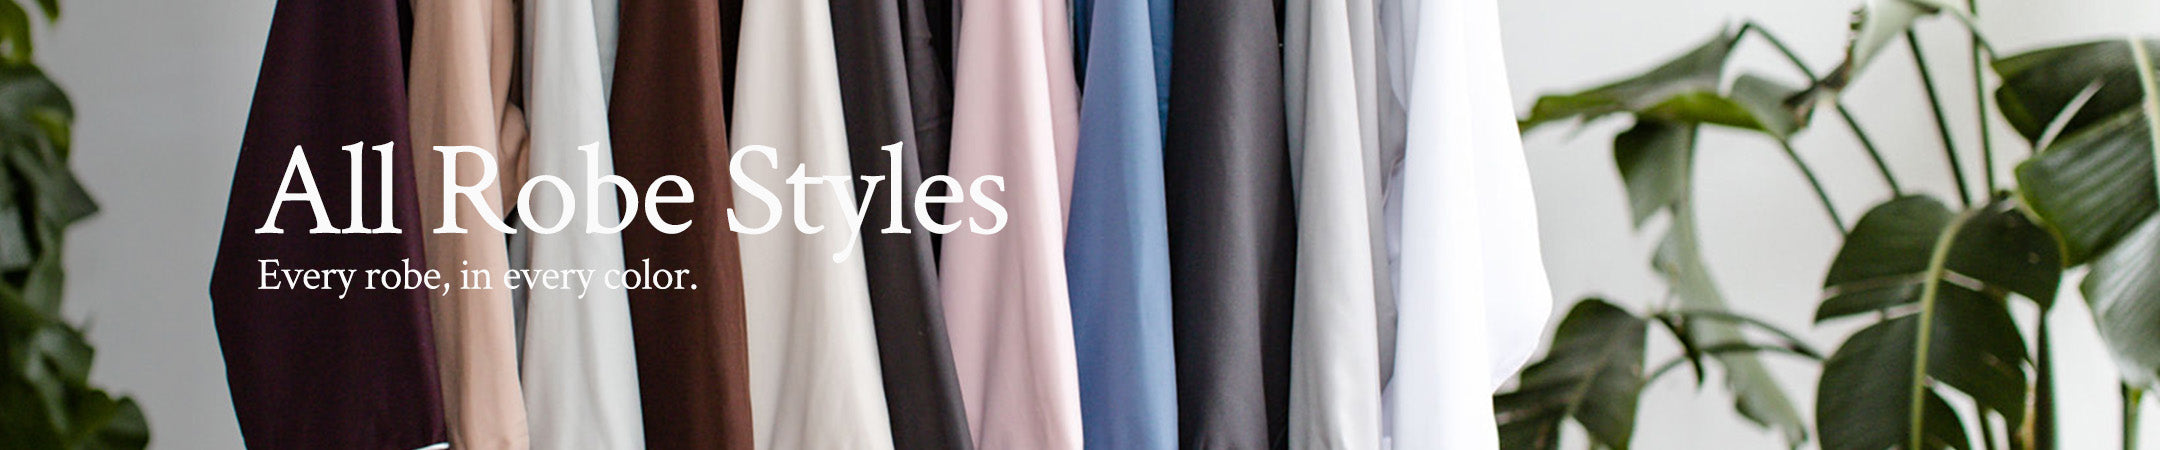 All Robe Styles